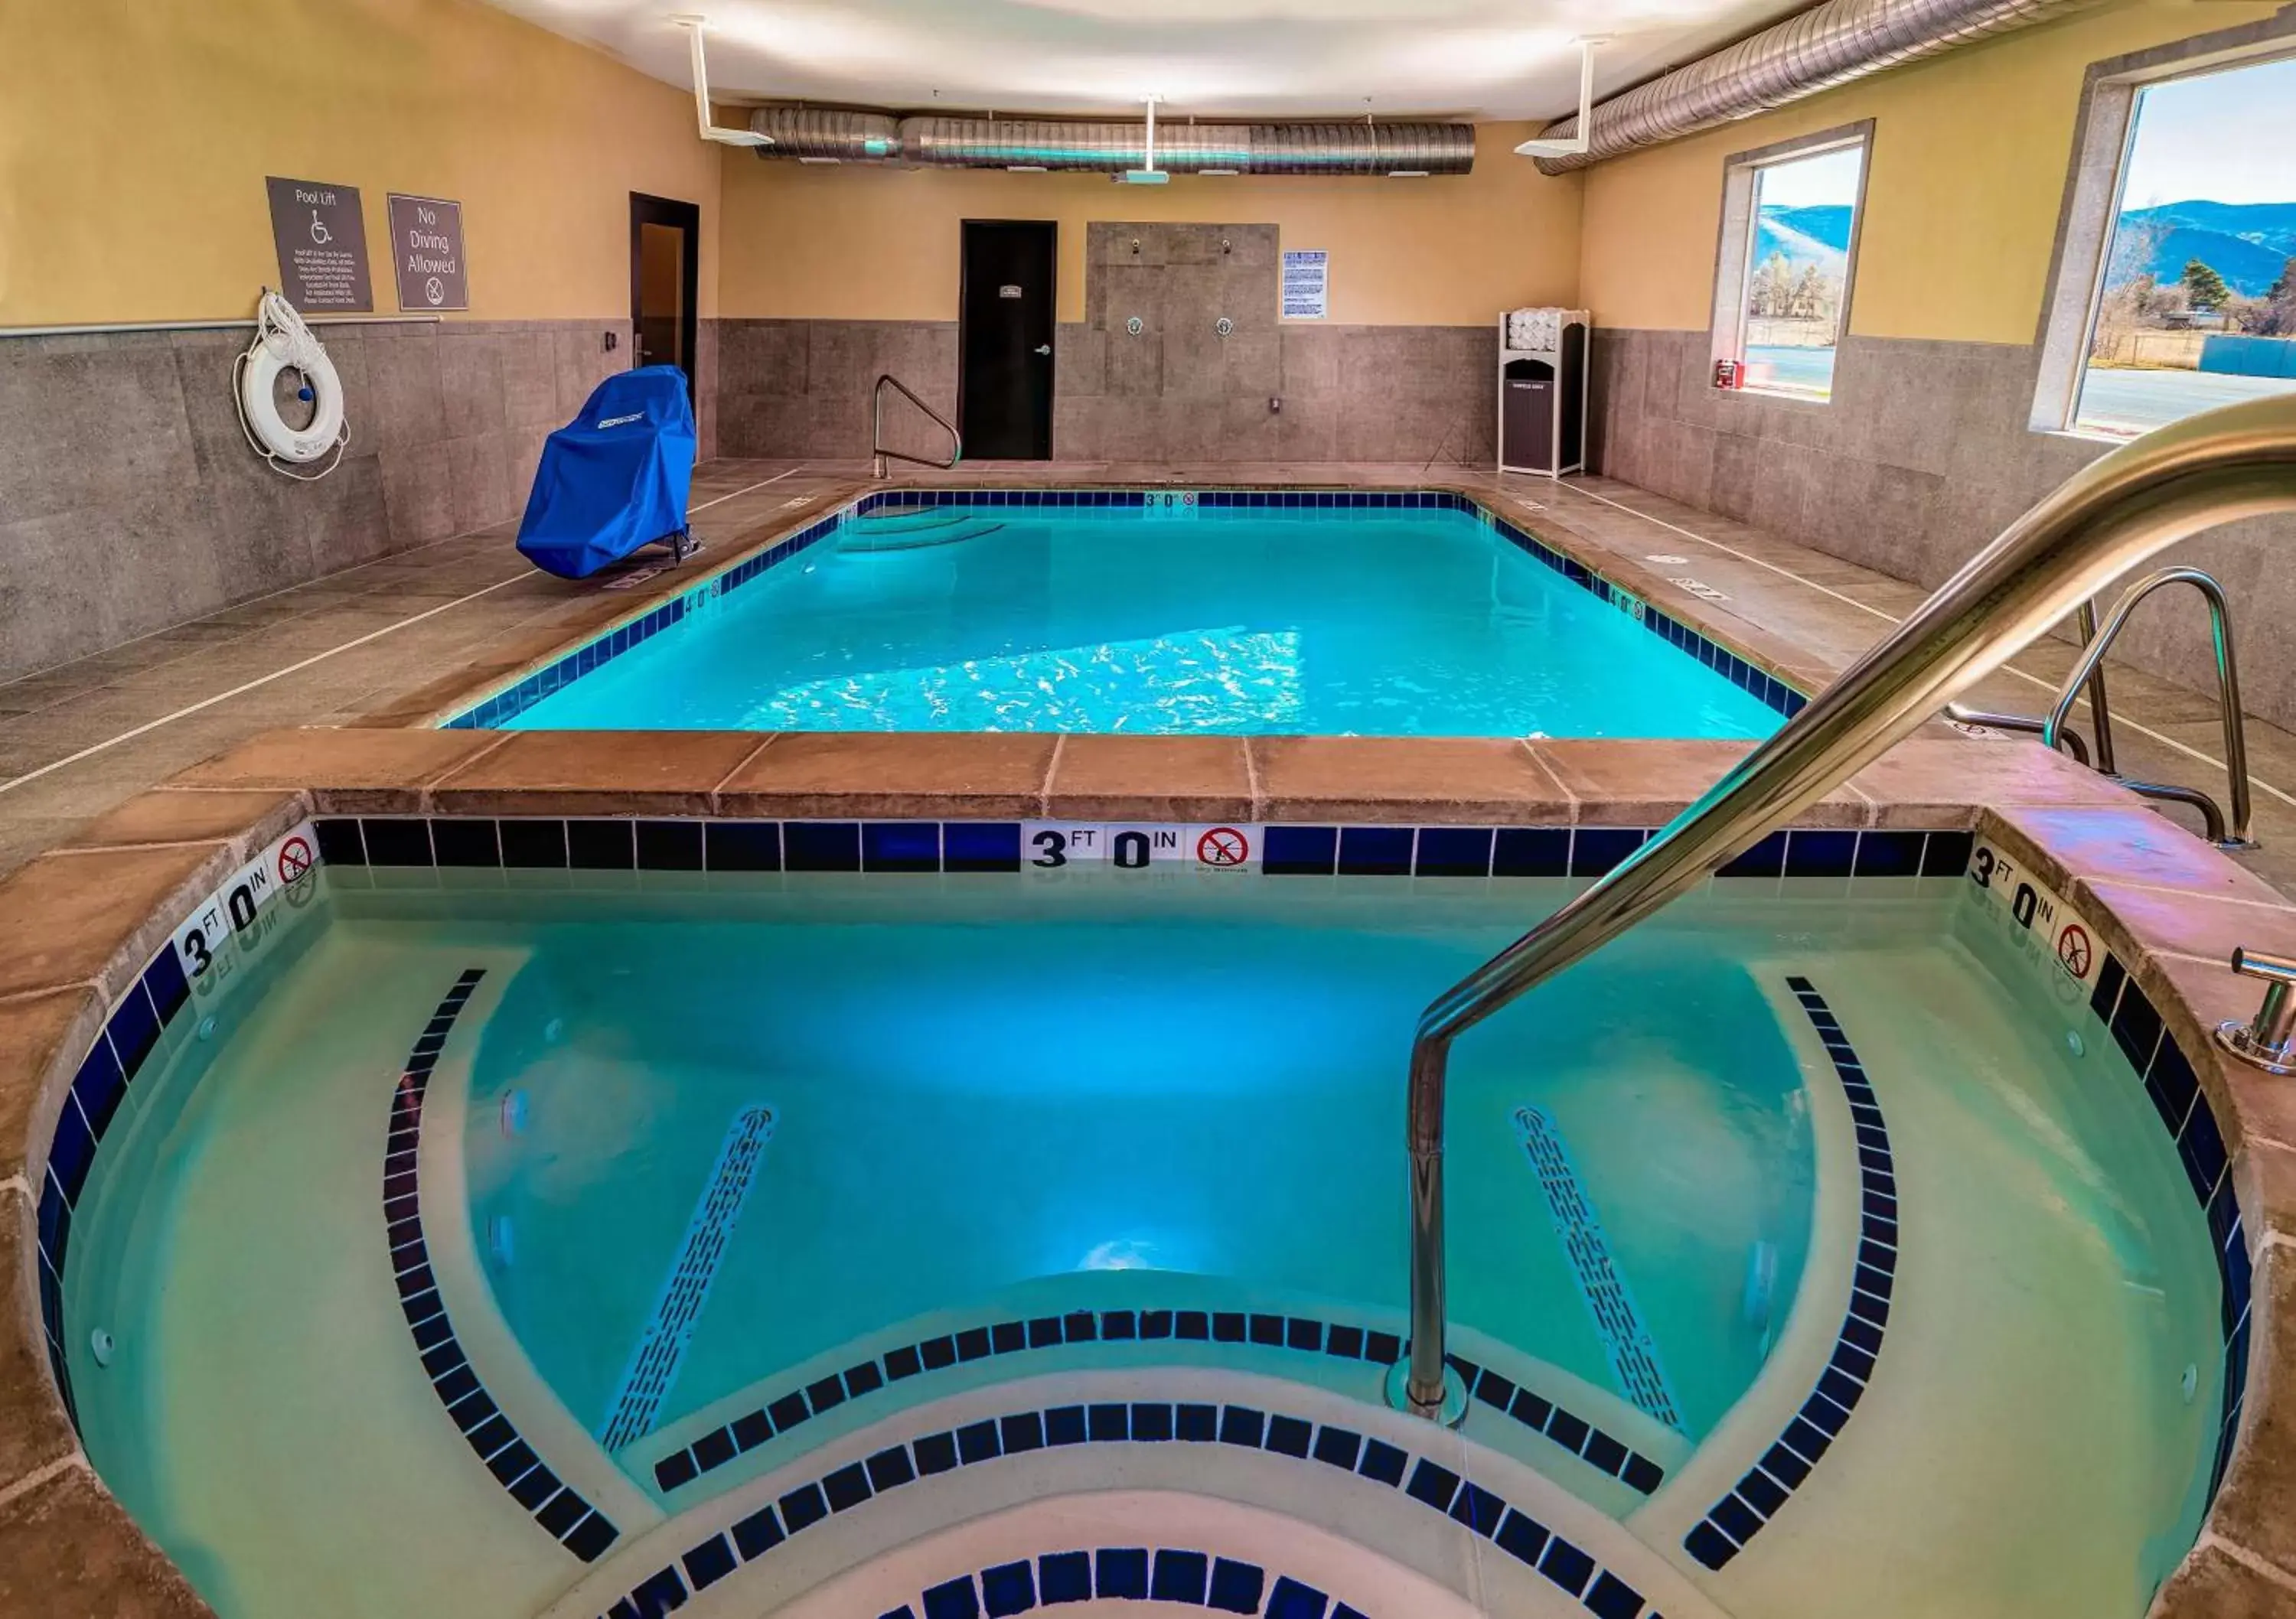 On site, Swimming Pool in Best Western Plus Heber Valley Hotel